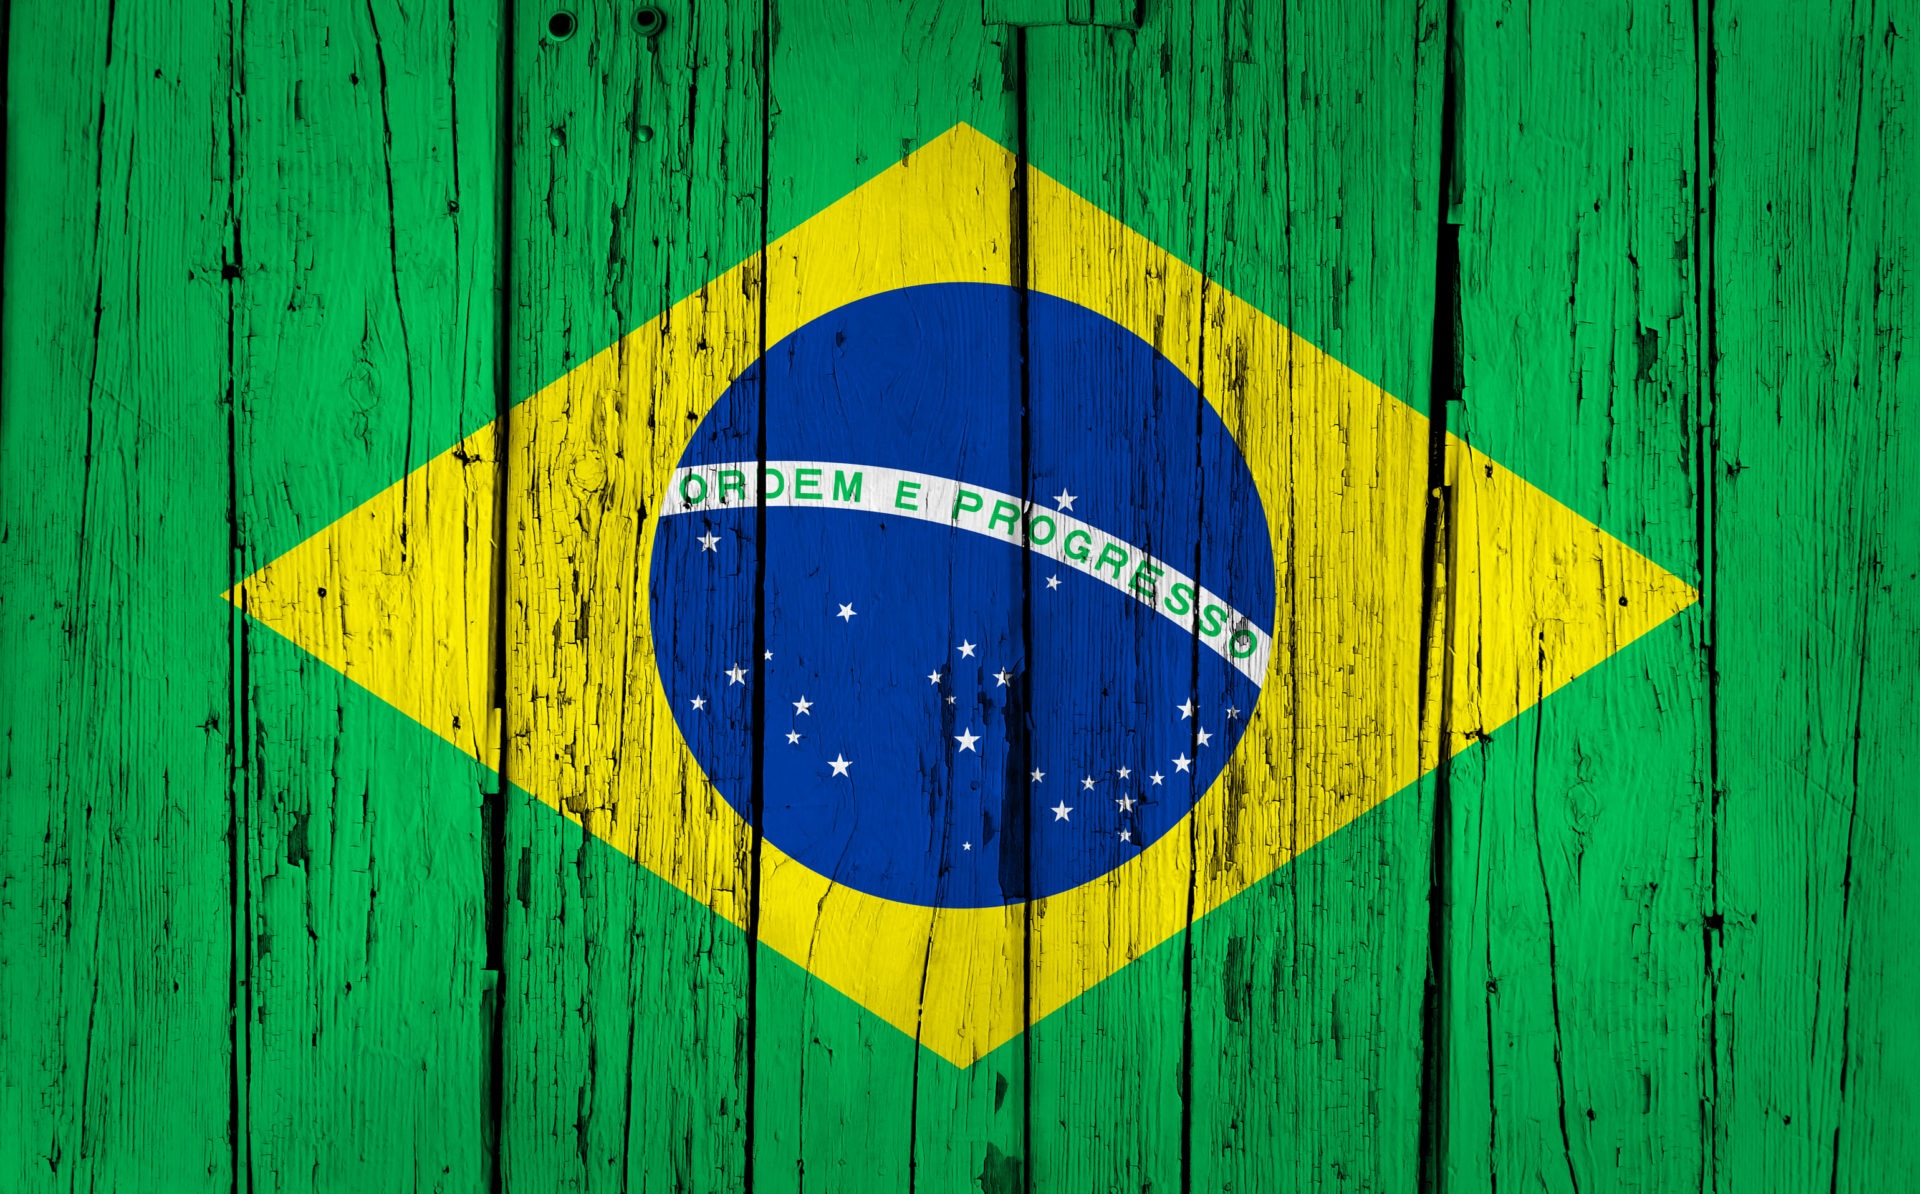 fotografia de bandera de brasil